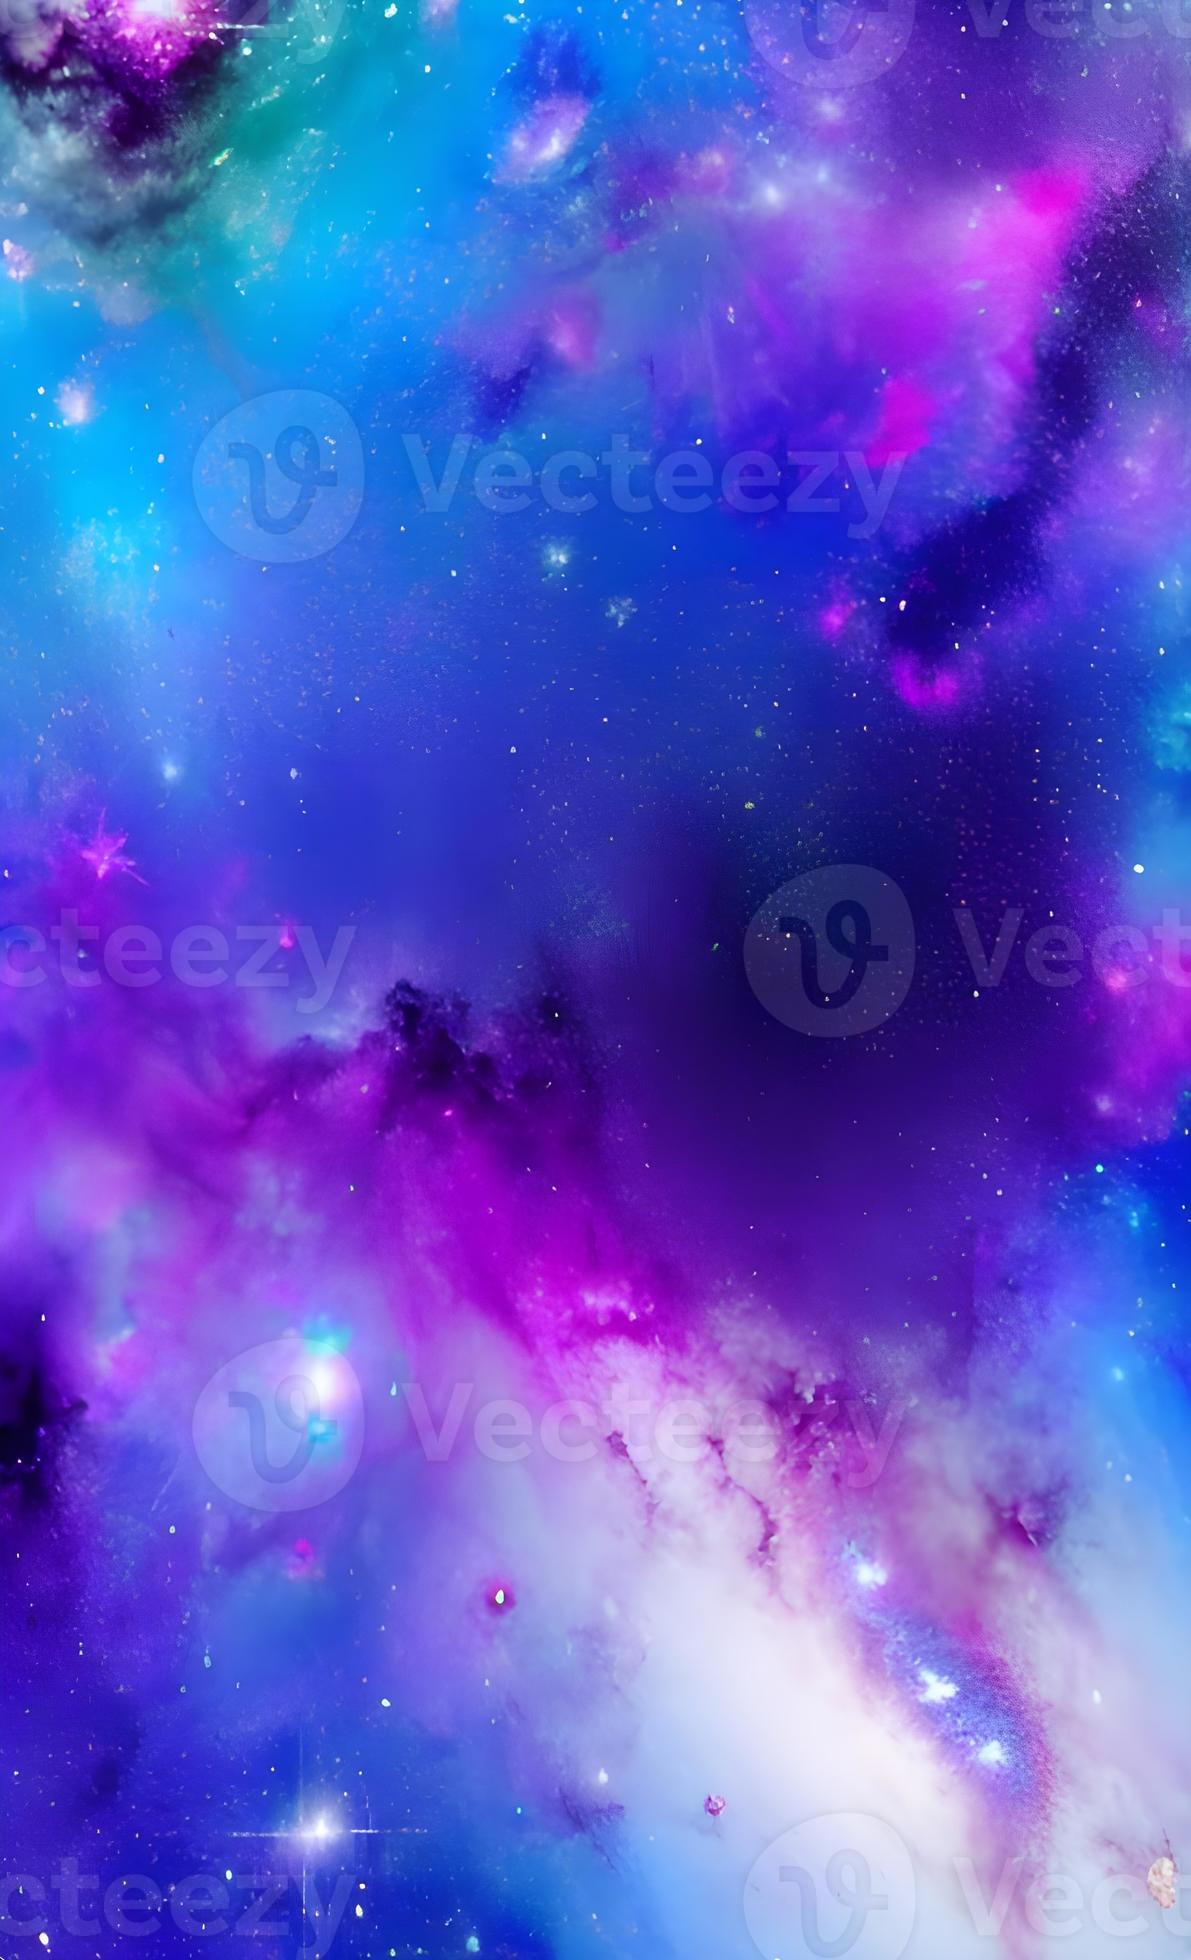 Galaxy Space background universe magic sky nebula night purple cosmos.  Cosmic galaxy wallpaper blue color star dust. Blue texture abstract galaxy  infinite future dark deep light 12260605 Stock Photo at Vecteezy